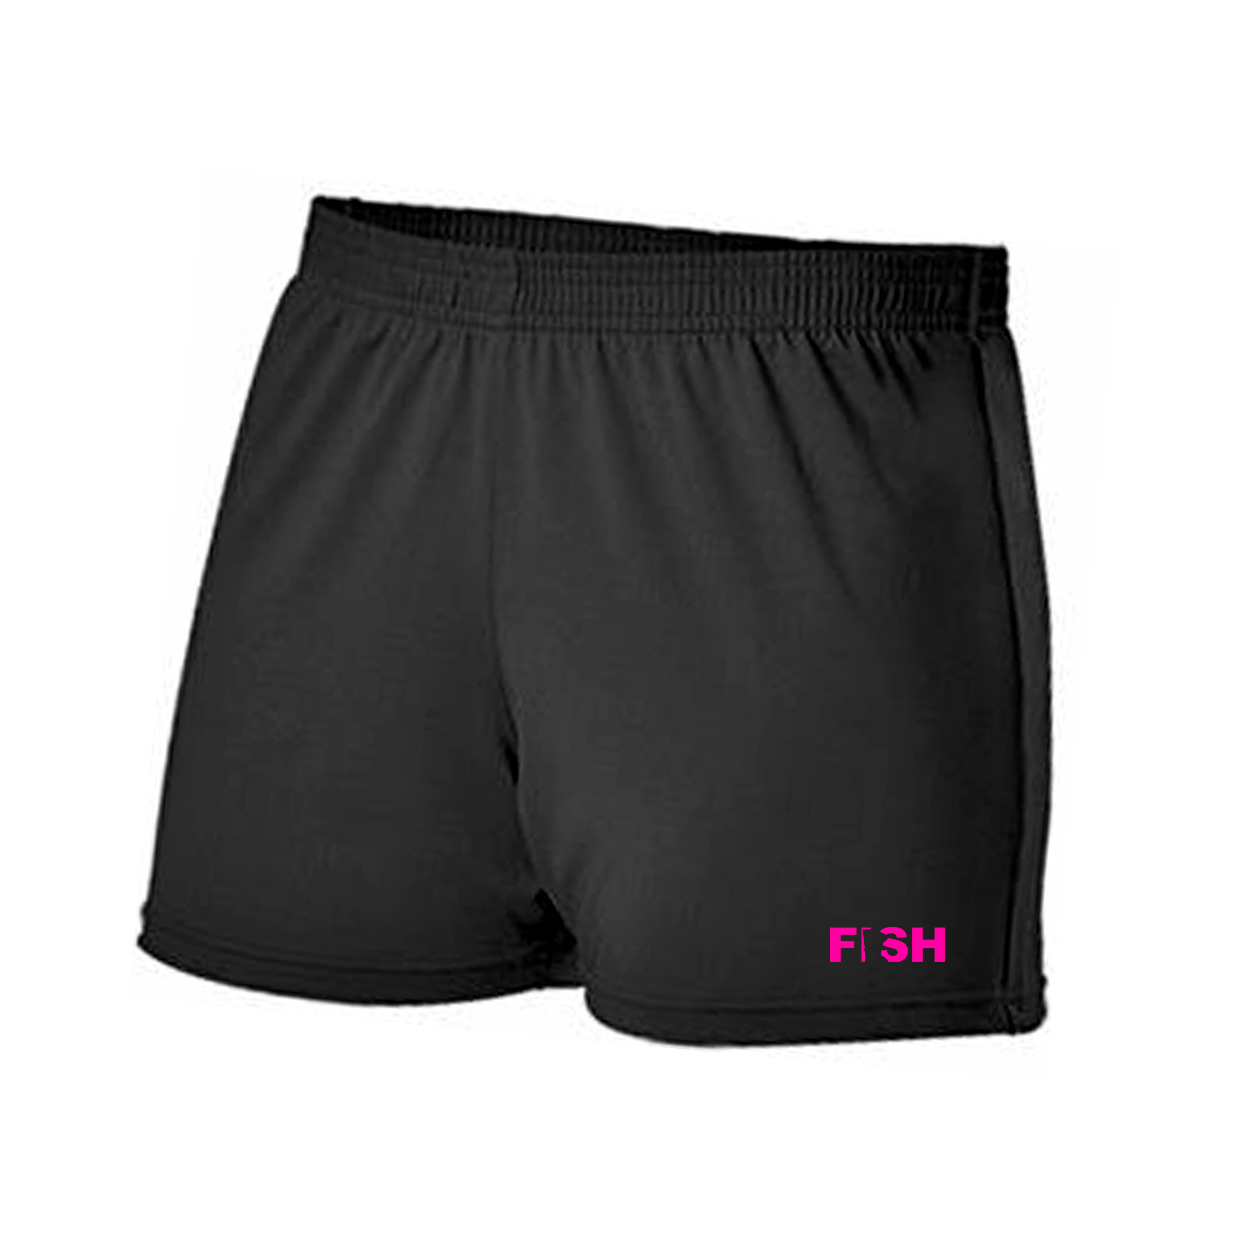 Fish Minnesota Classic Women's Cheer Shorts Black (Pink Logo)